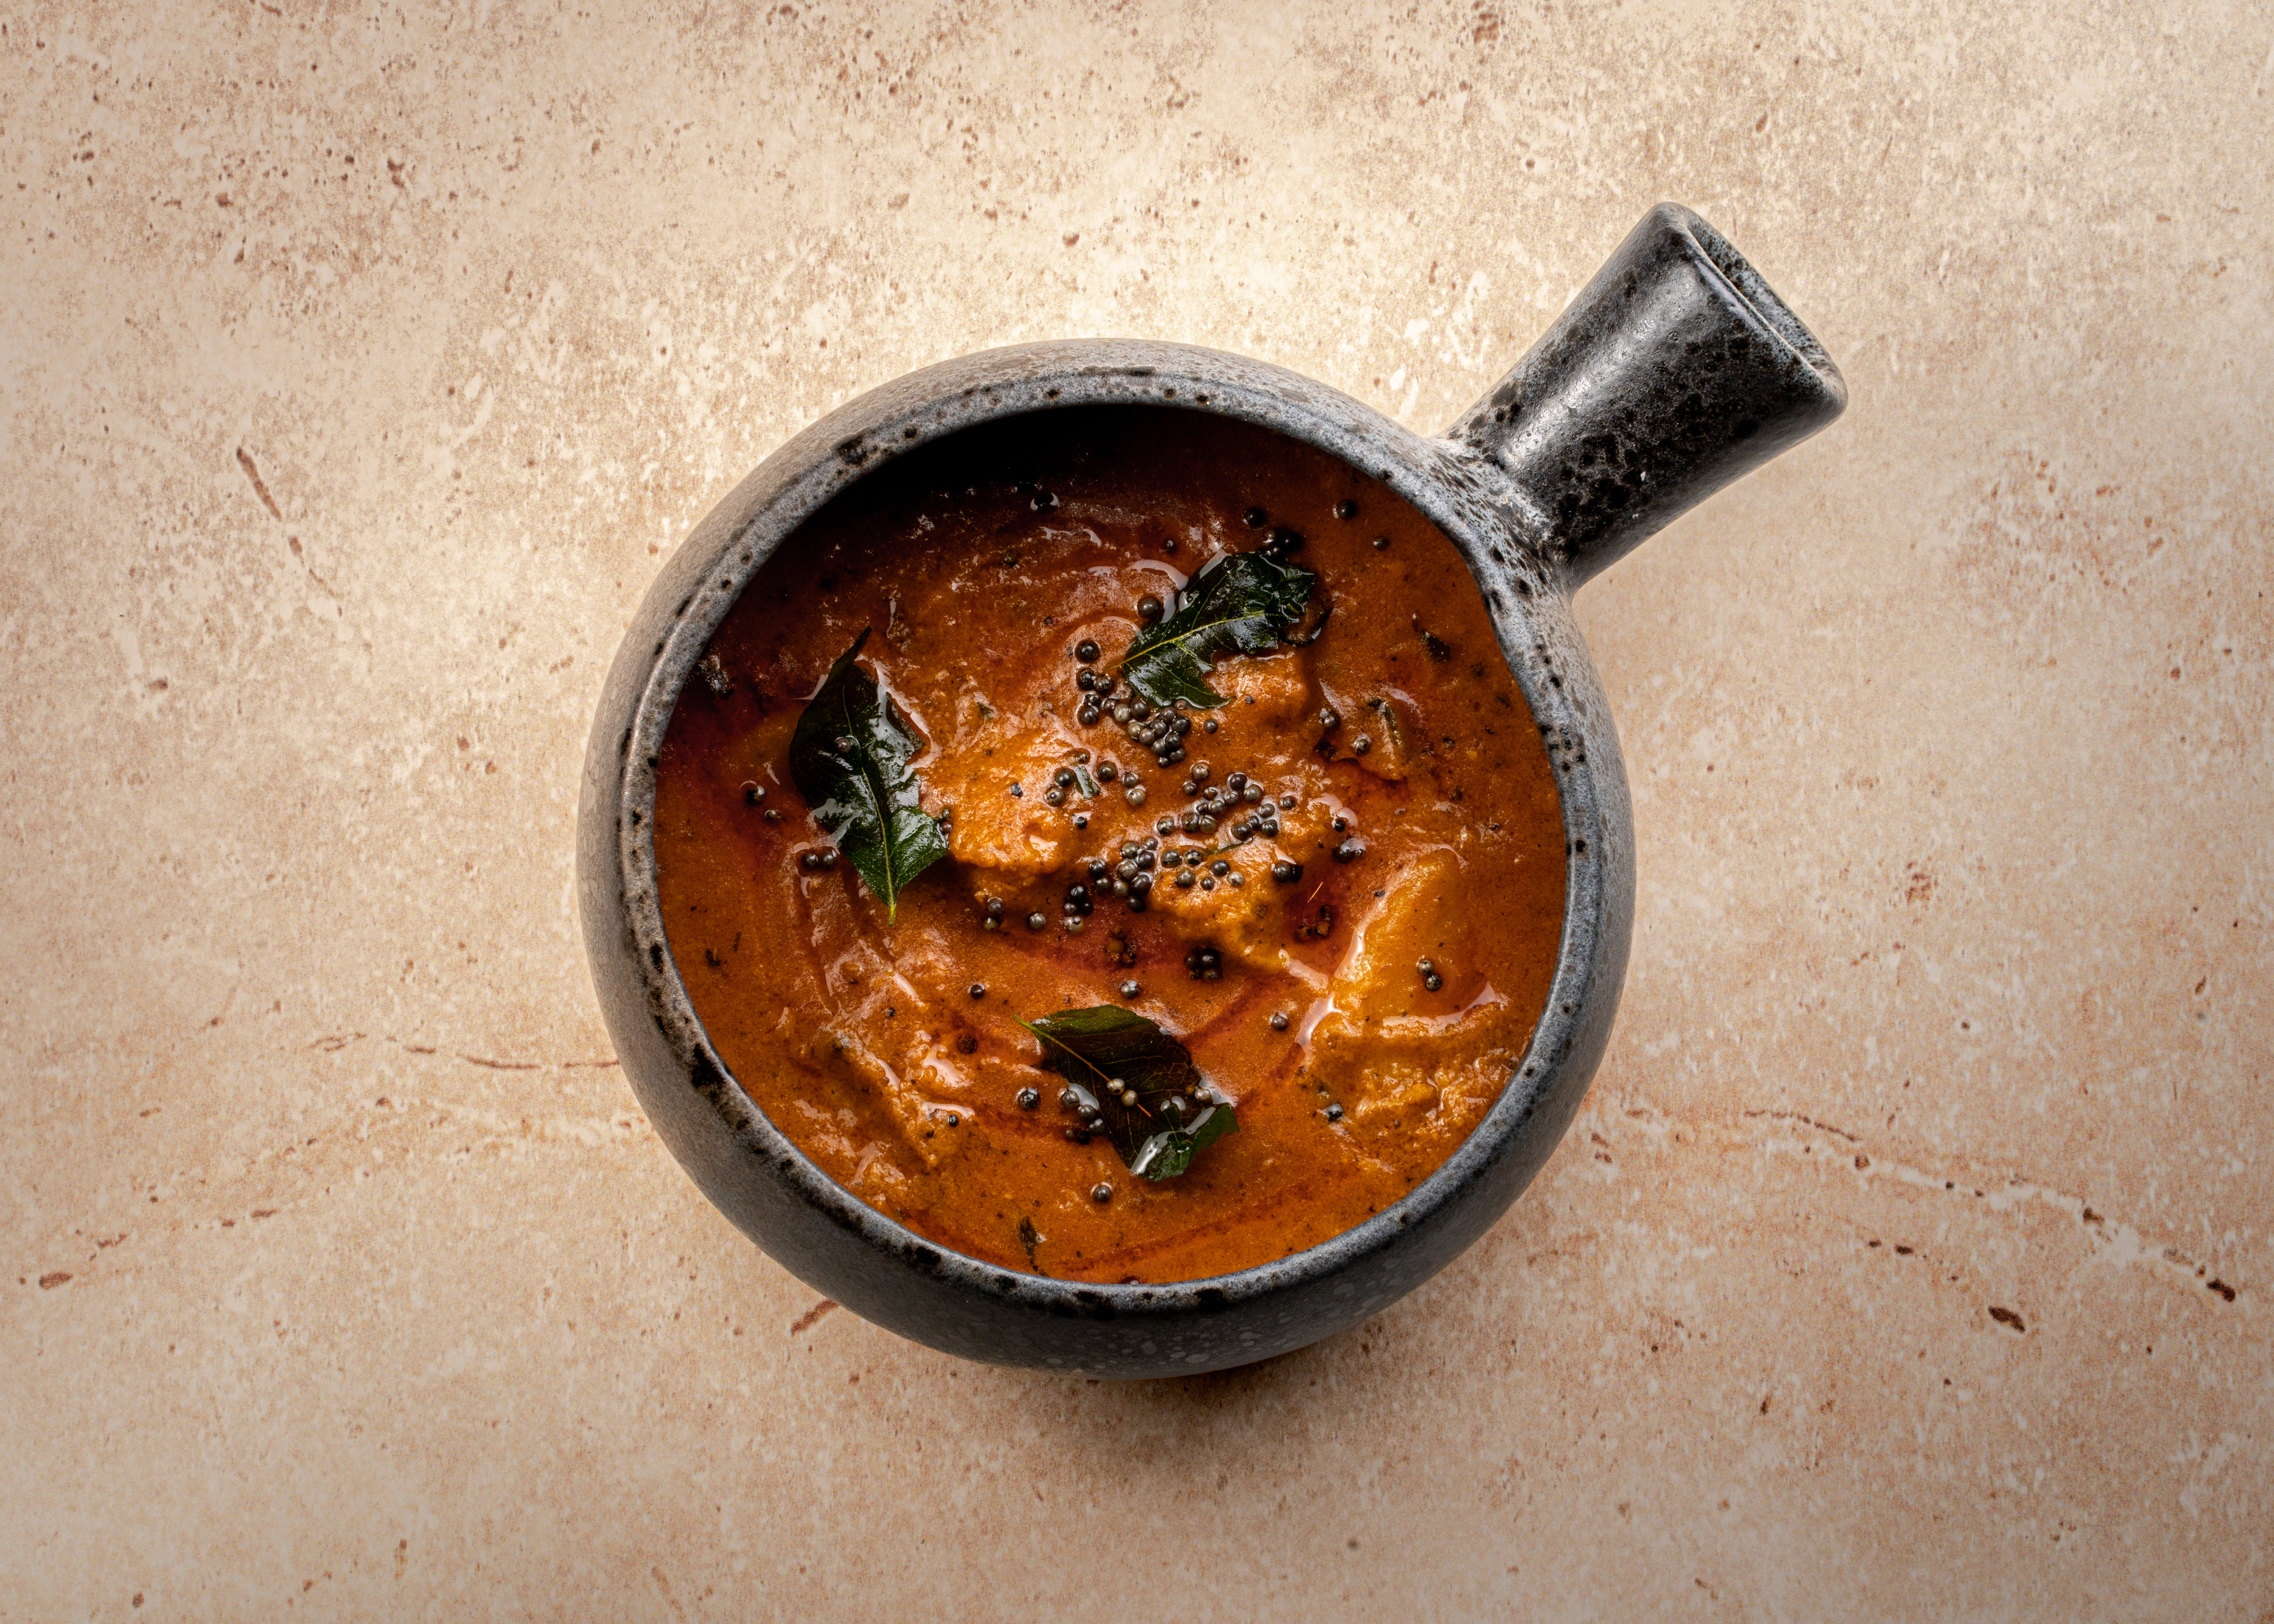 Birdseye shot of Dabbawal Railway Lamb Curry in a dark pot against a grey concrete surface.